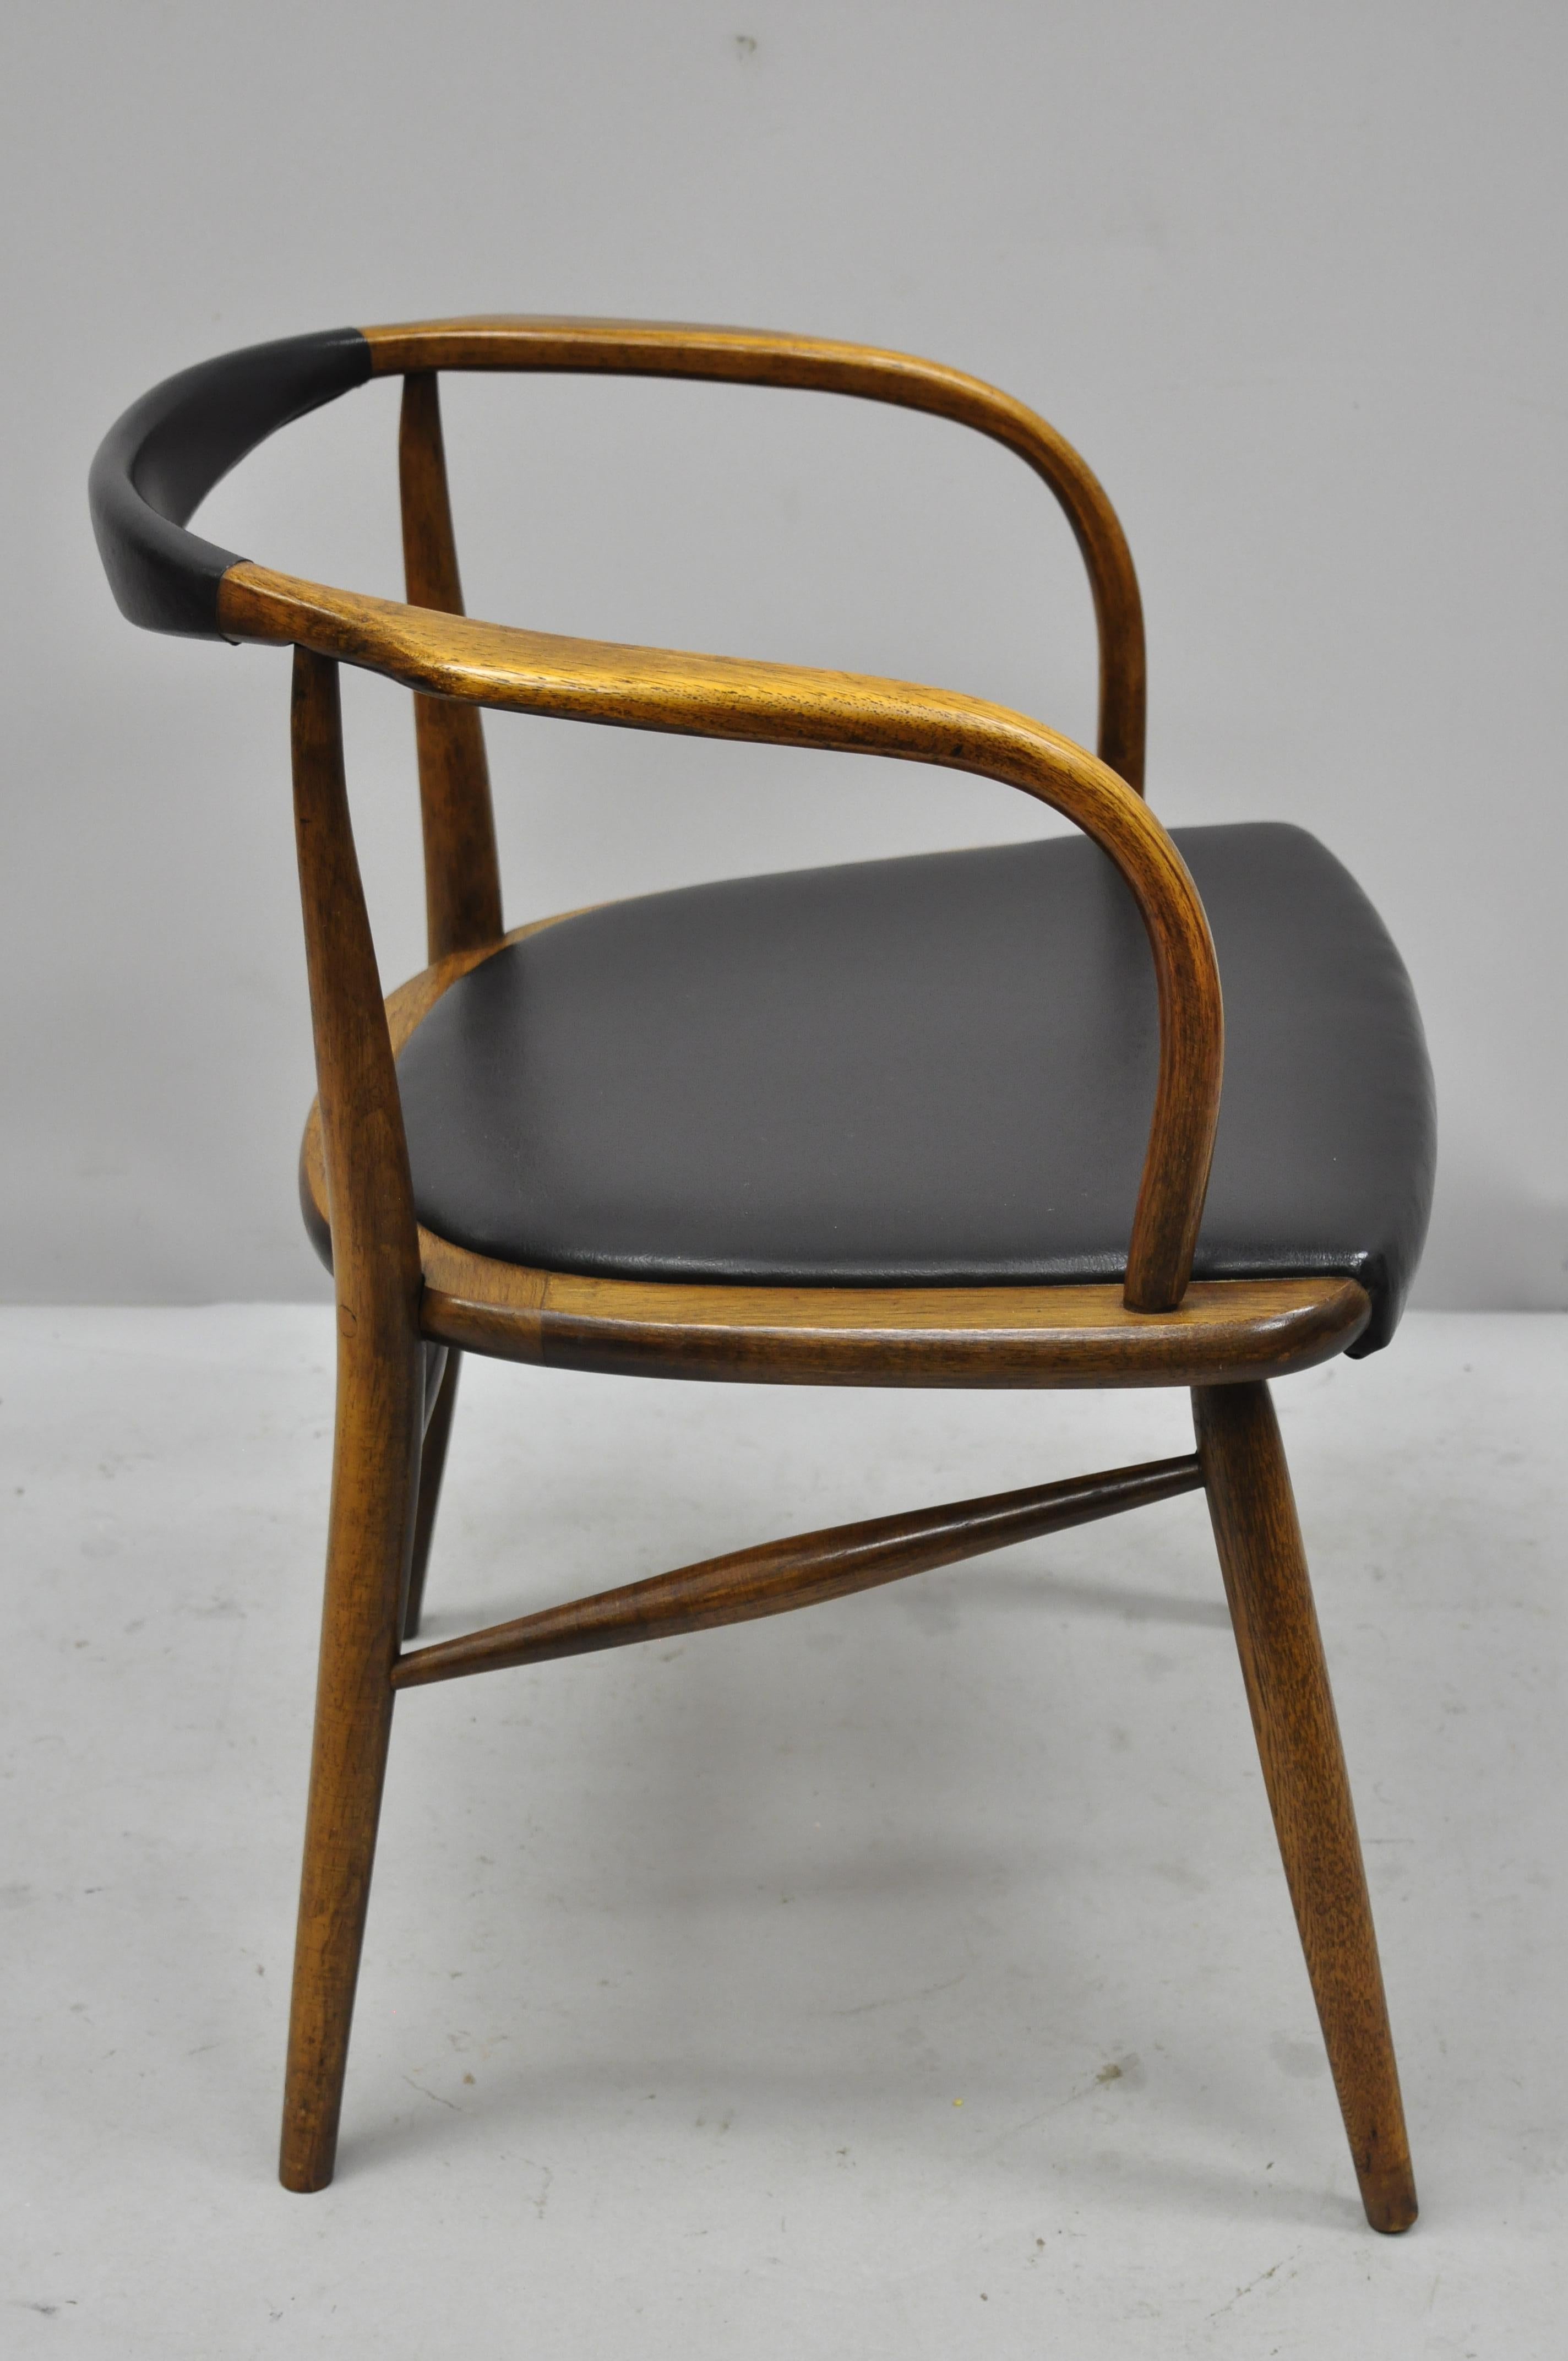 Mid-20th Century Vintage Boling Chair Co. Mid-Century Modern Oak Barrel Back Danish Modern Chair